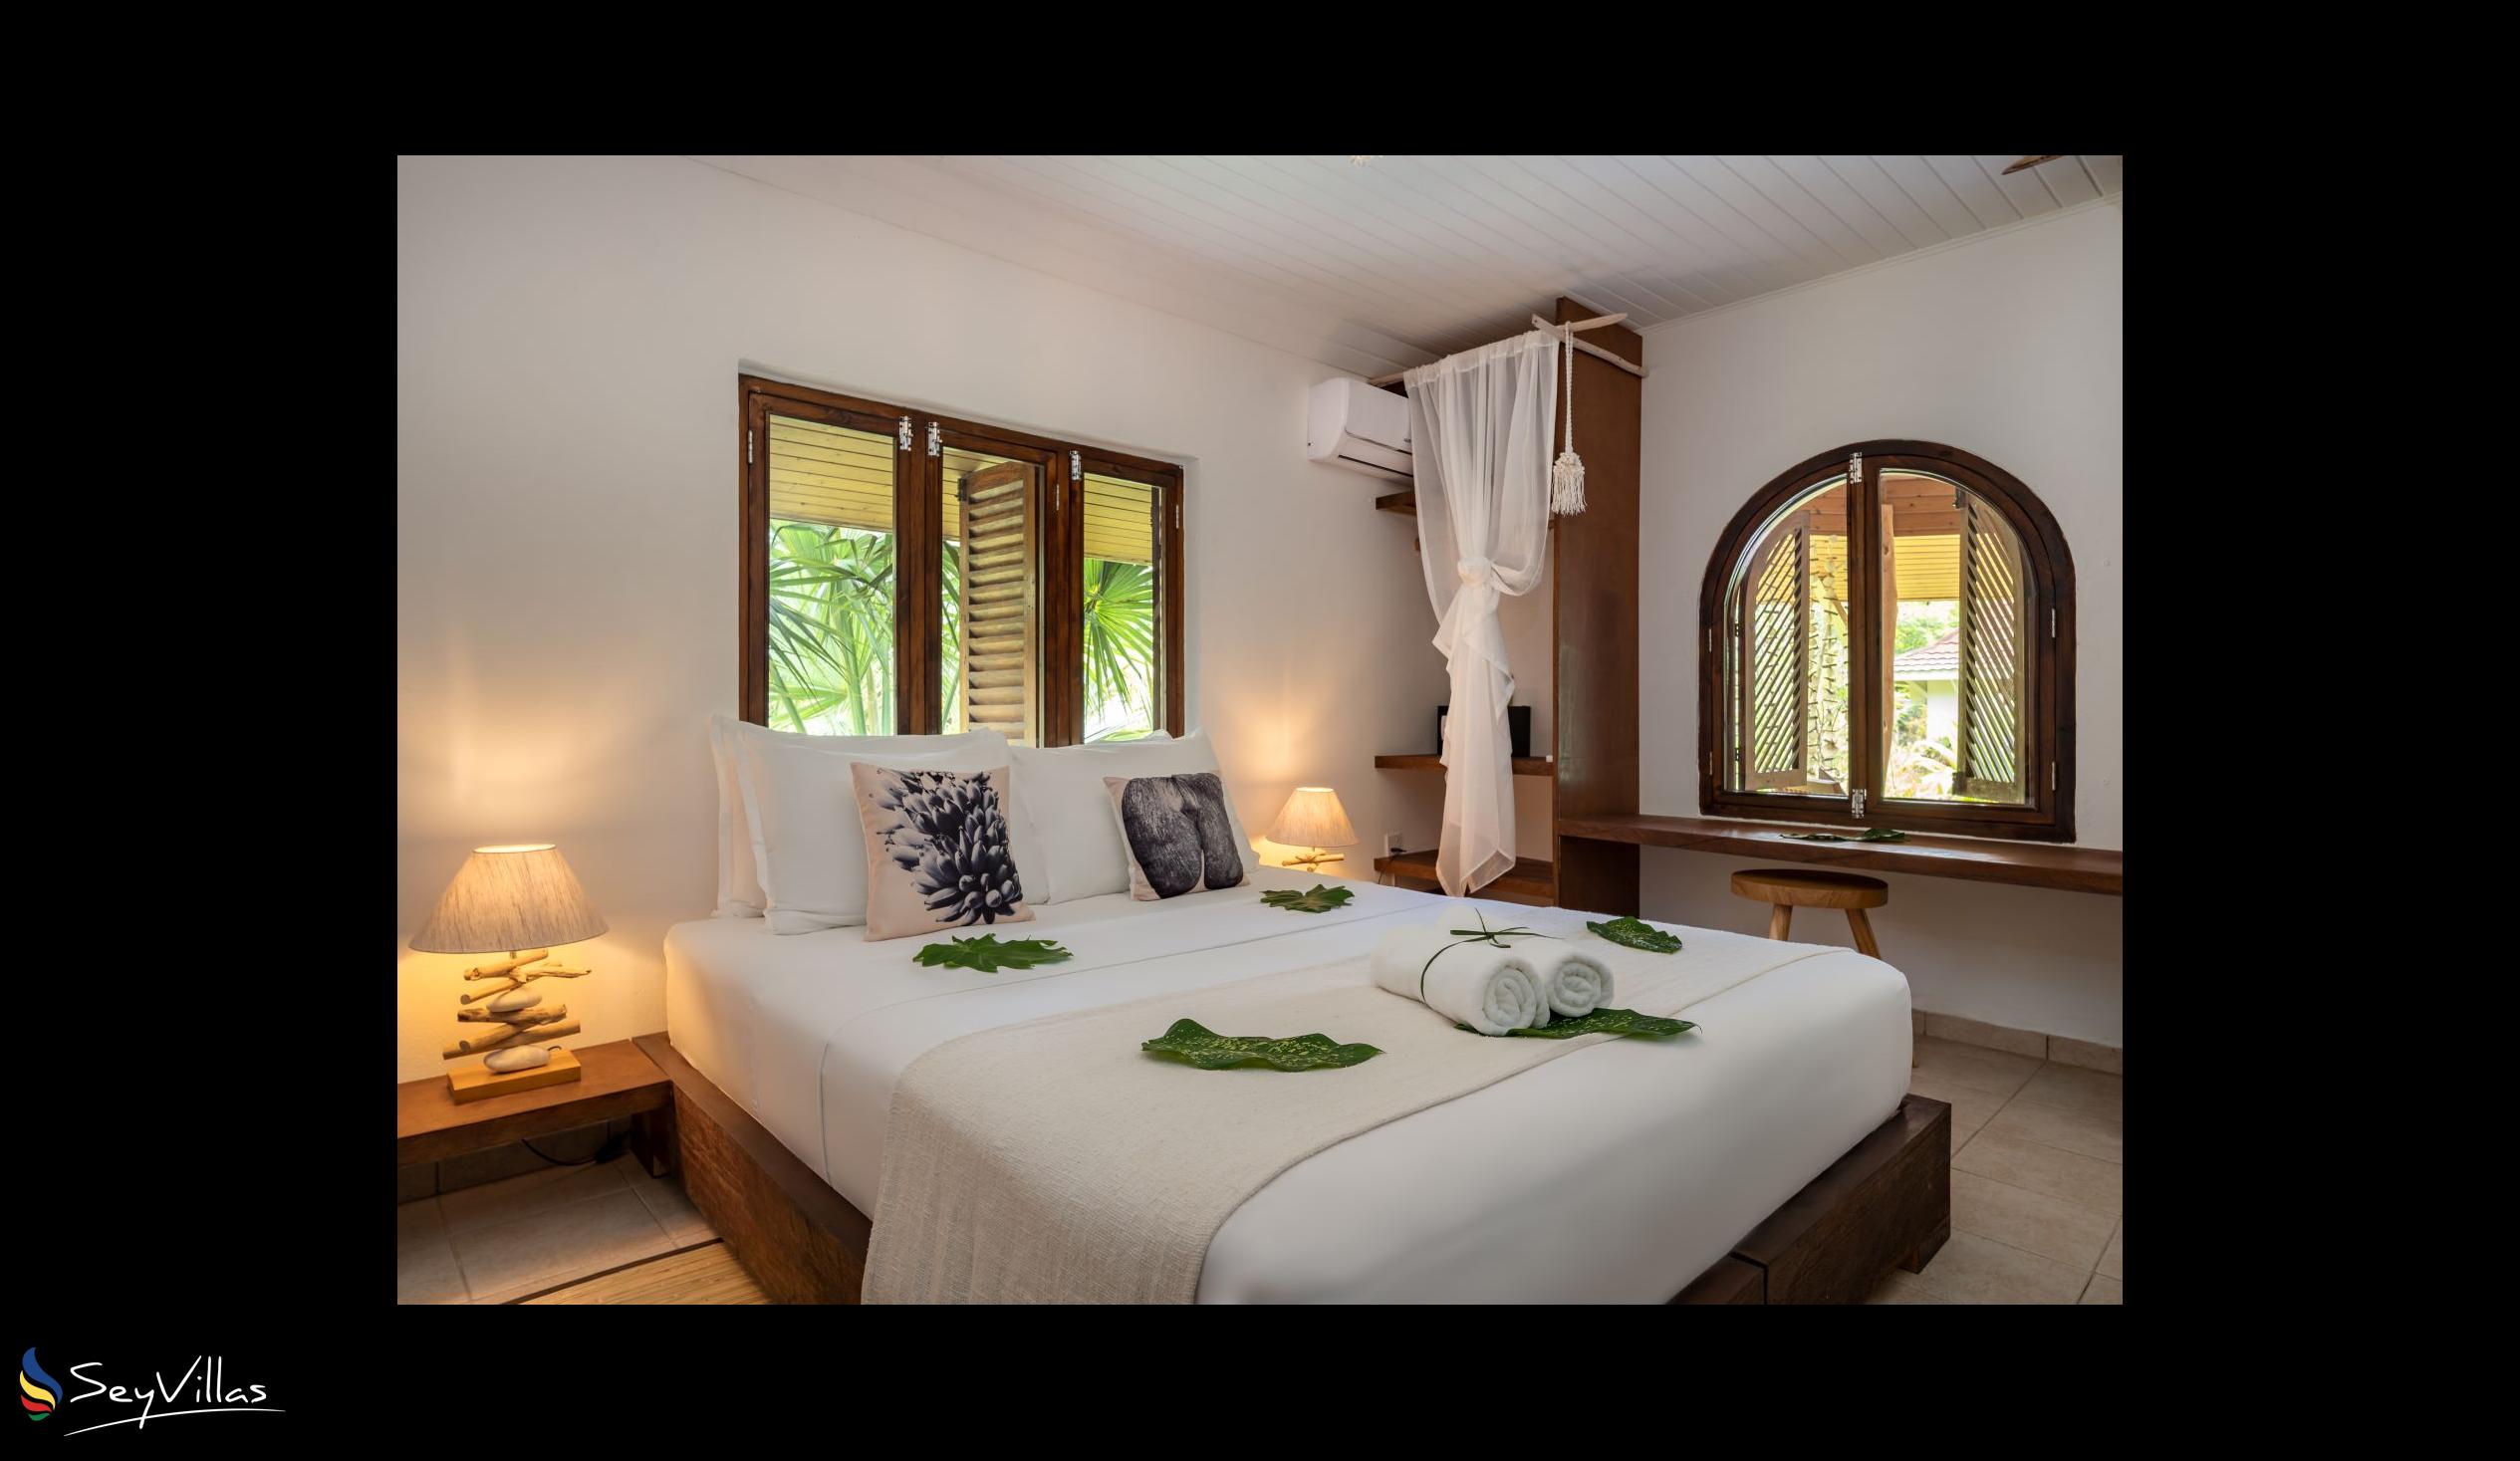 Foto 66: Bliss Hotel Praslin - Eden Garden - Camera Charme - Praslin (Seychelles)